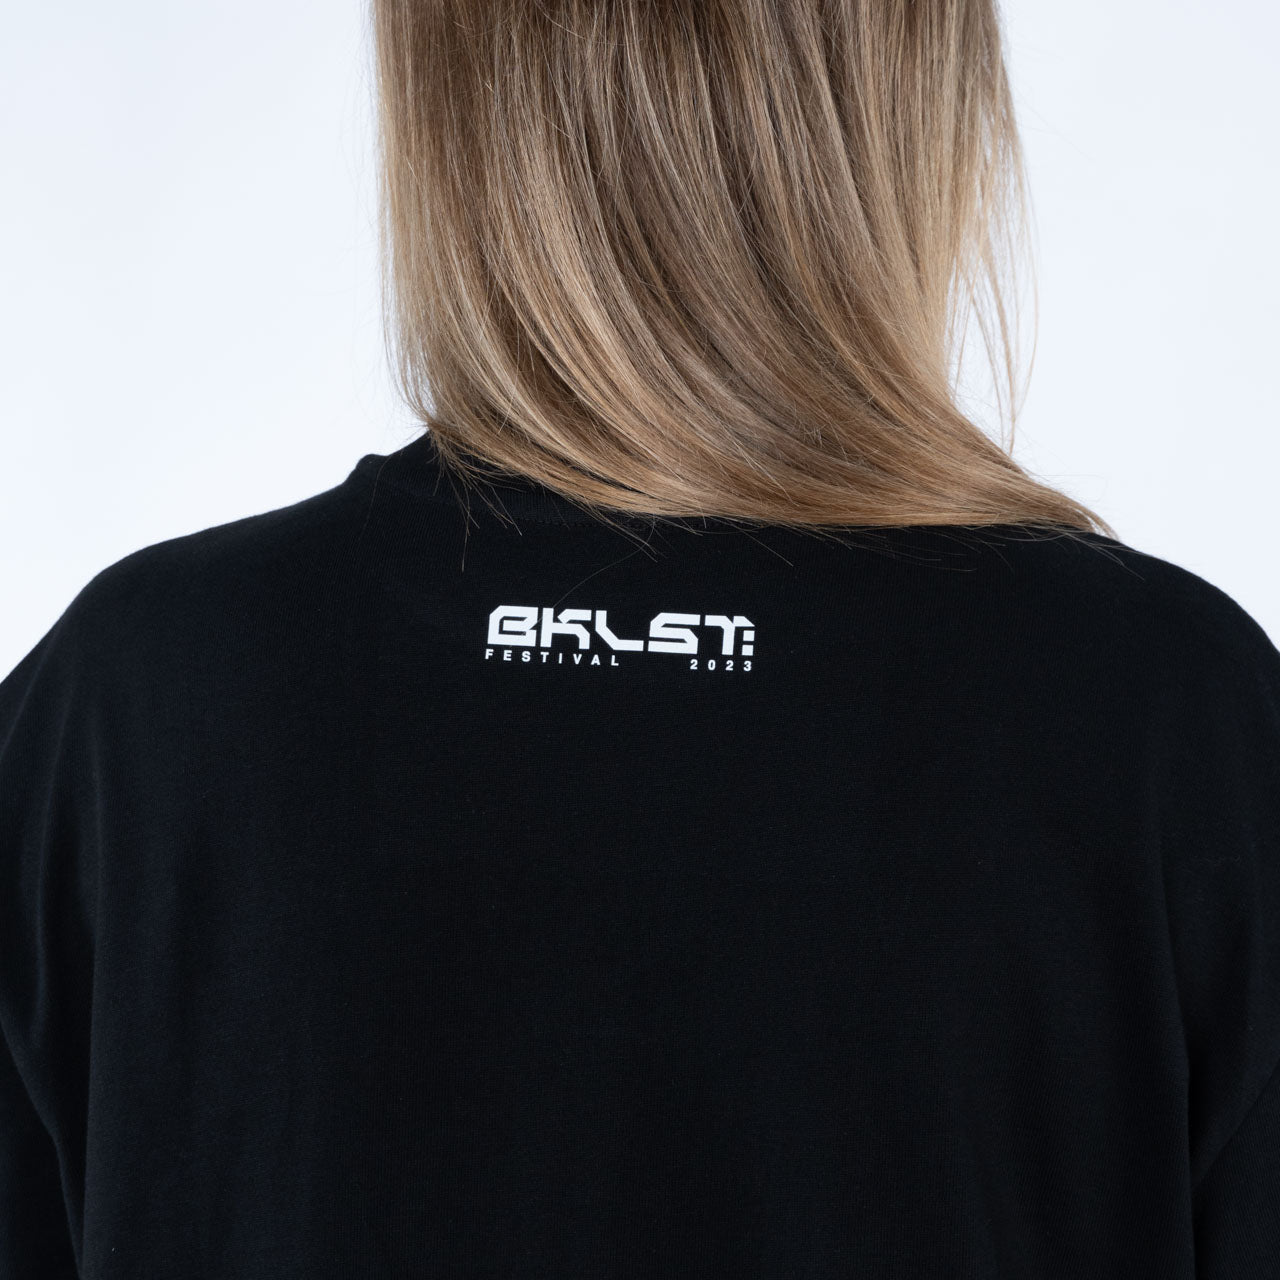 Blacklist - Blacklist Festival 2023 Deep Space T-Shirt